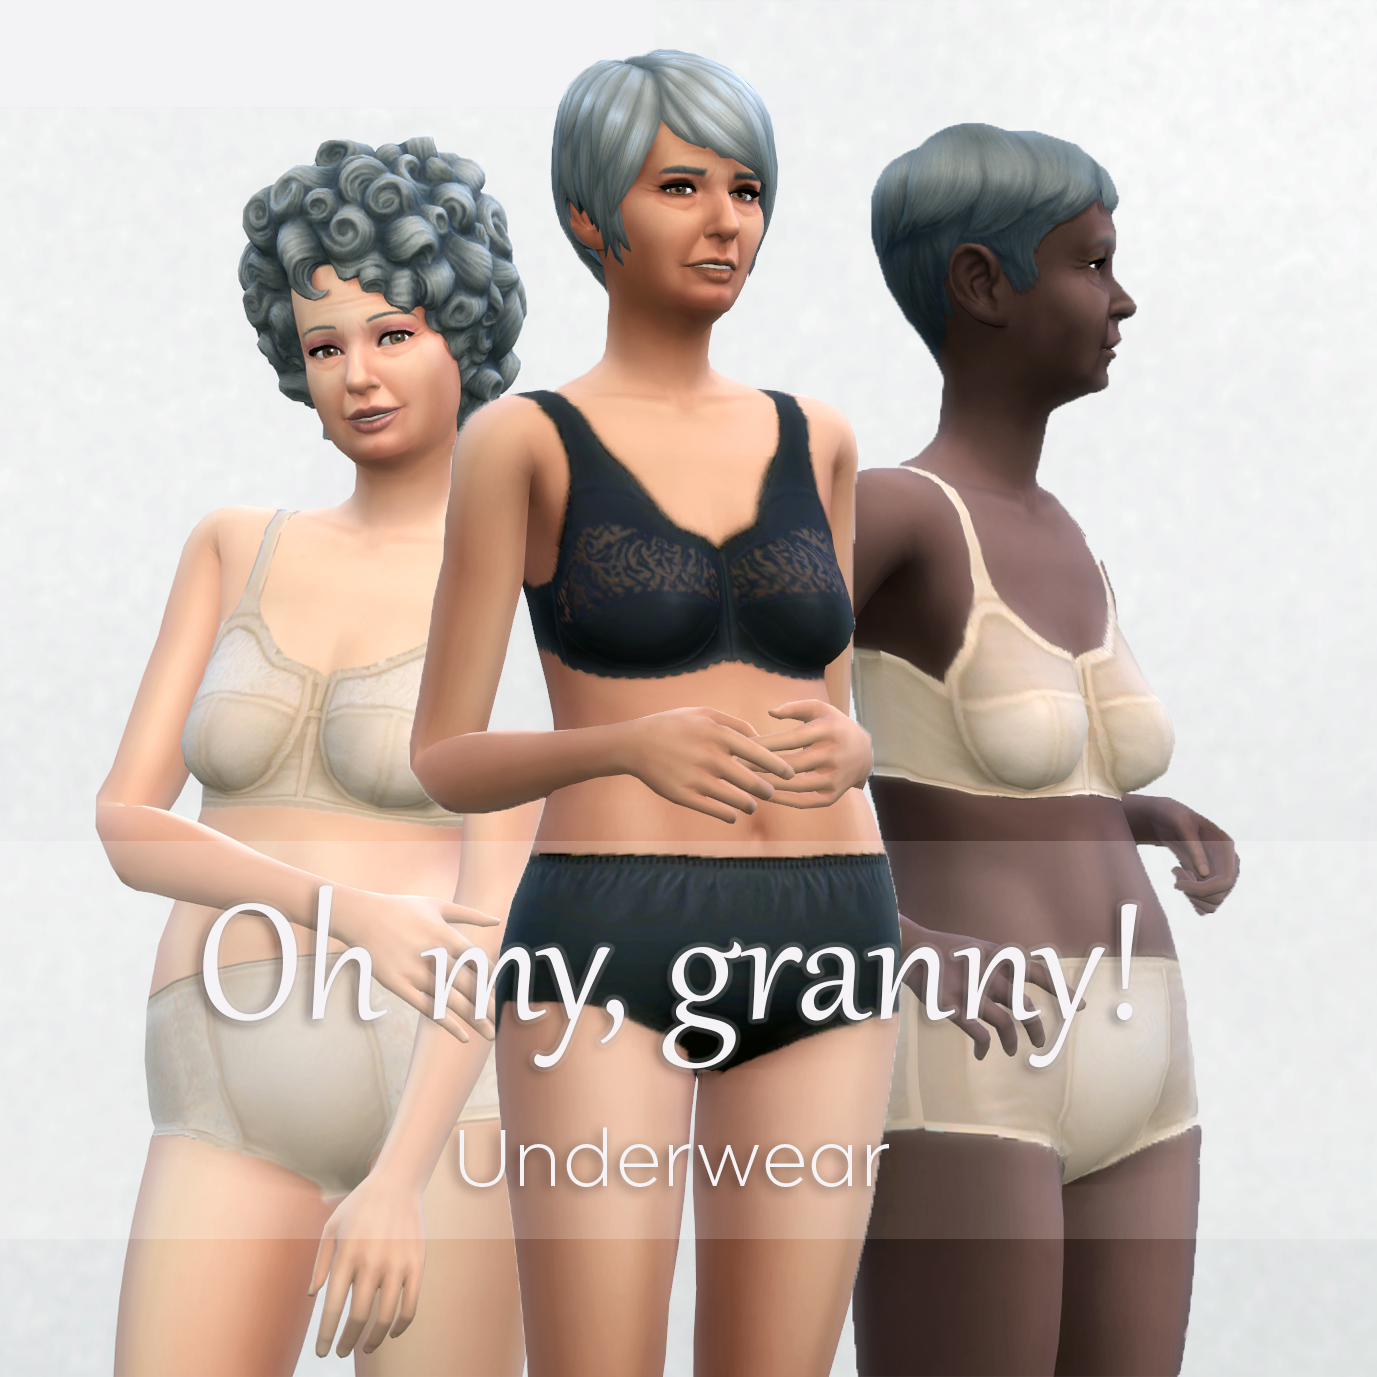 sexy grandma in lingerie